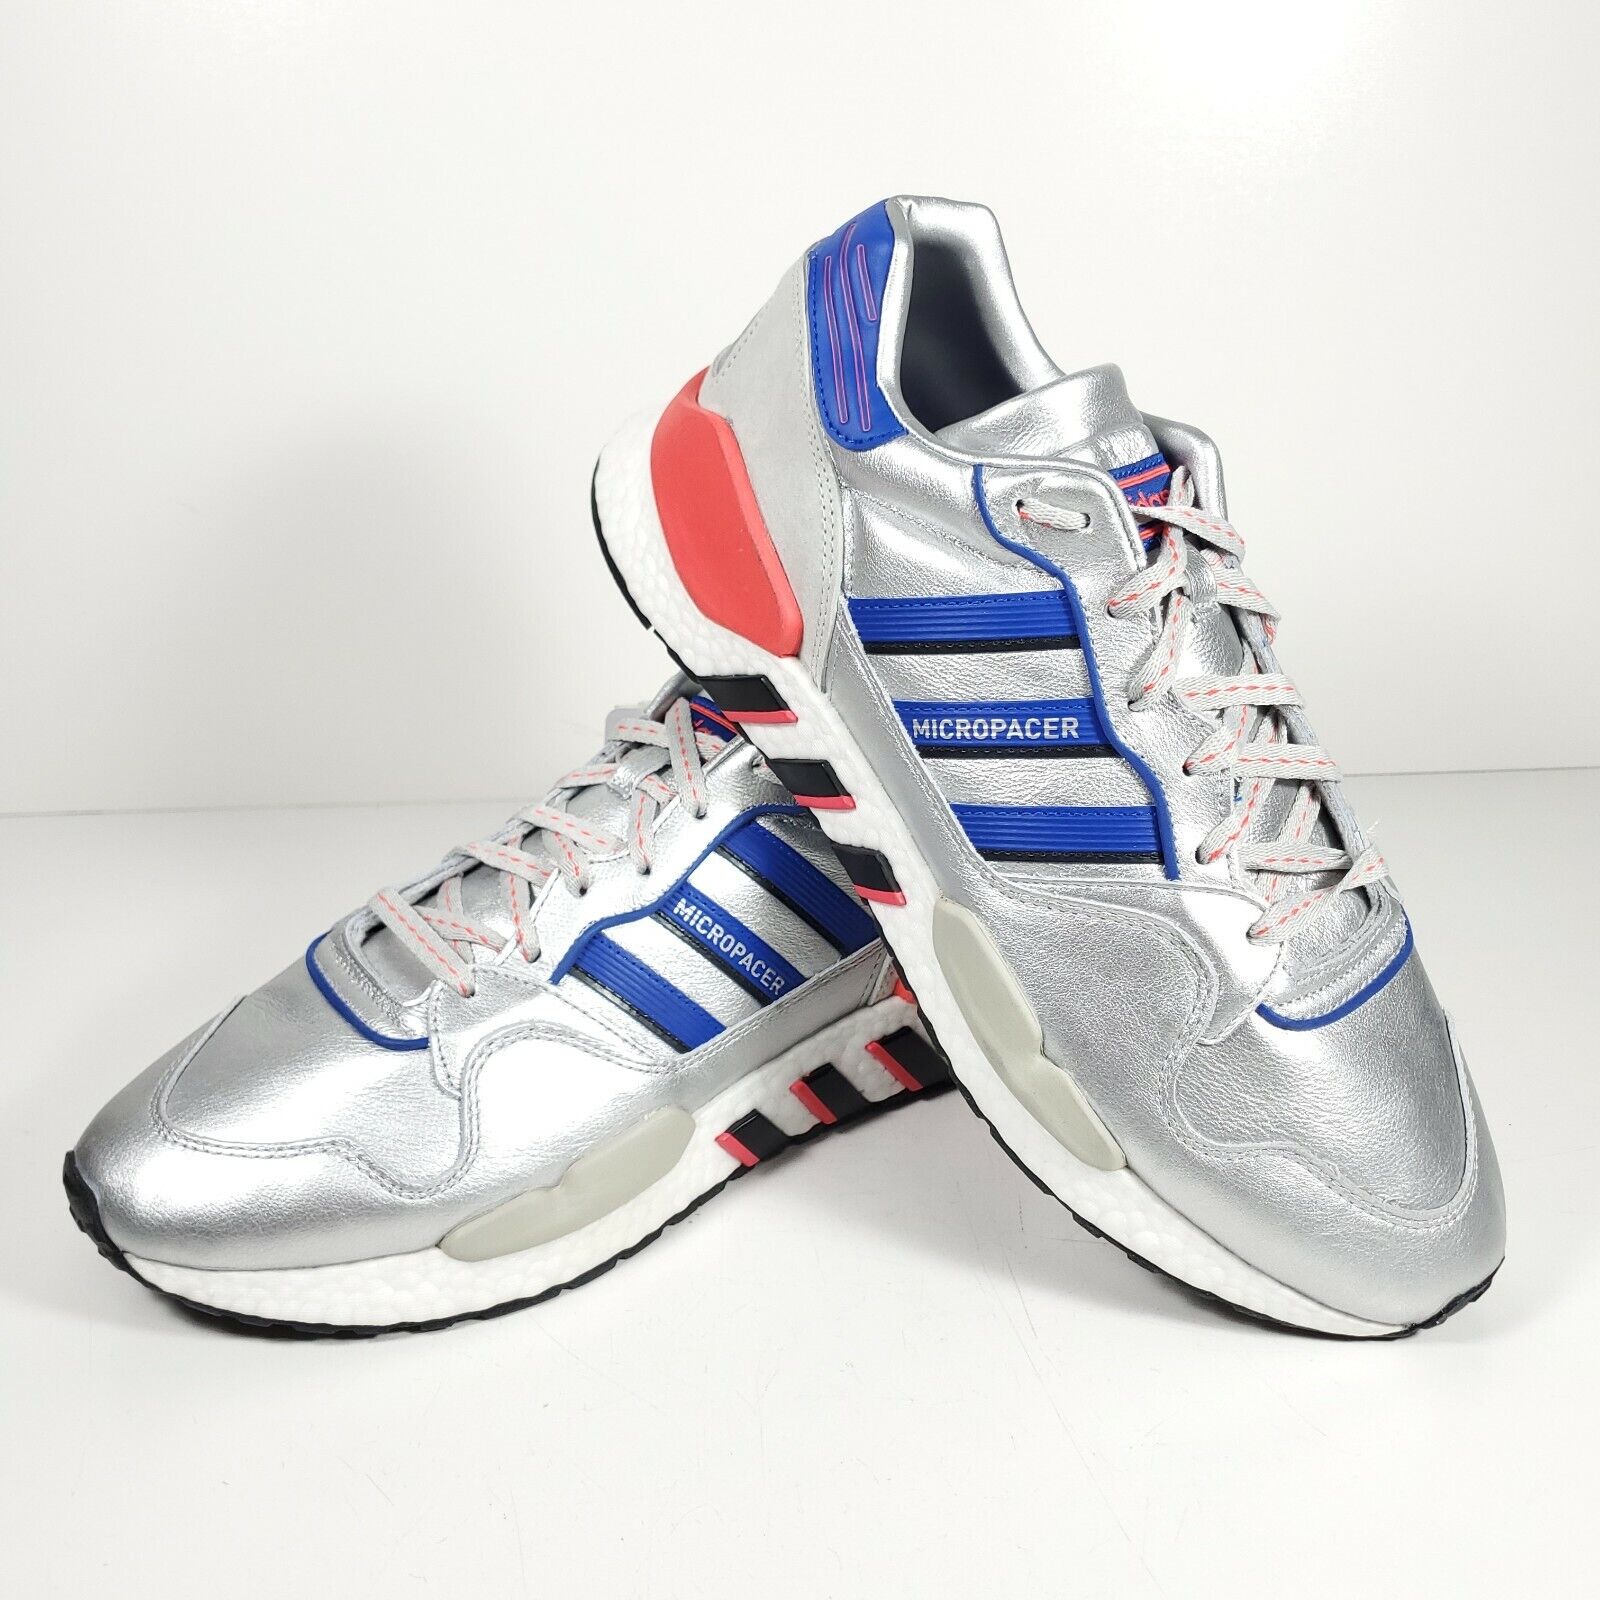 Adidas ZX930 X EQT Mens Shoes Silver Metallic-Power Blue-Shock Red ef5558  sz 9